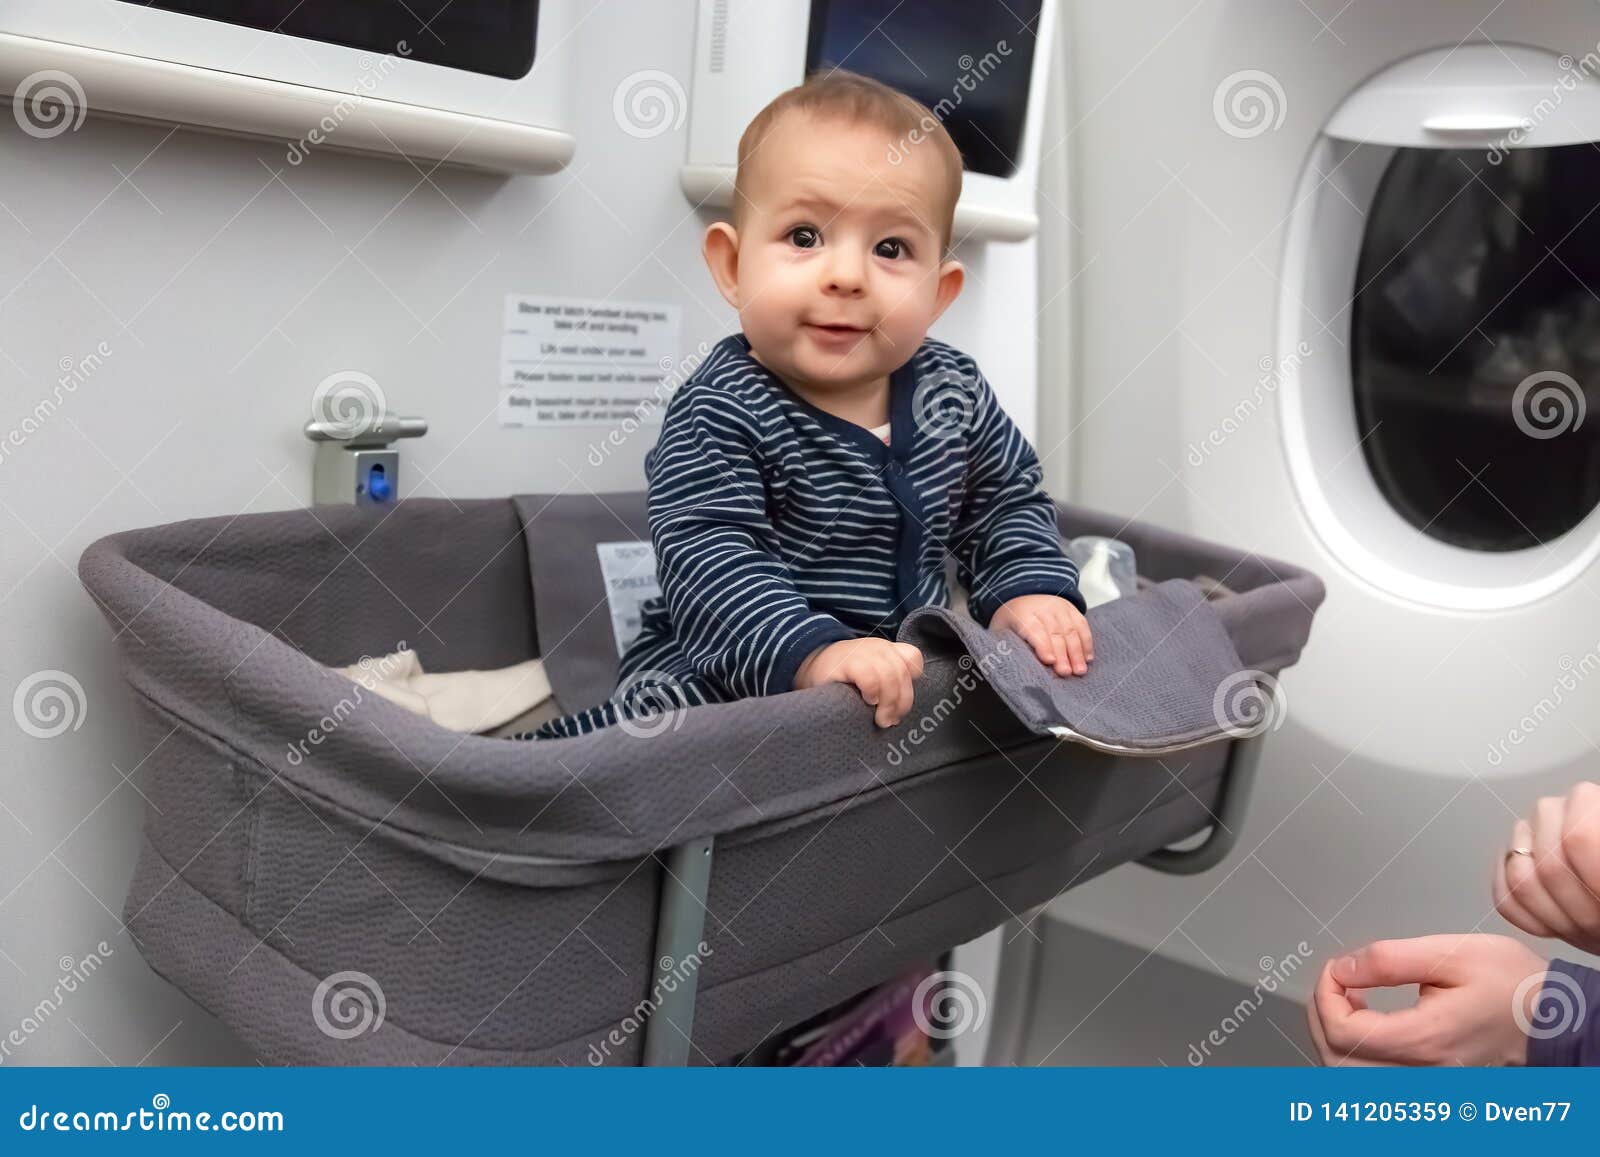 child bassinet seat in flight